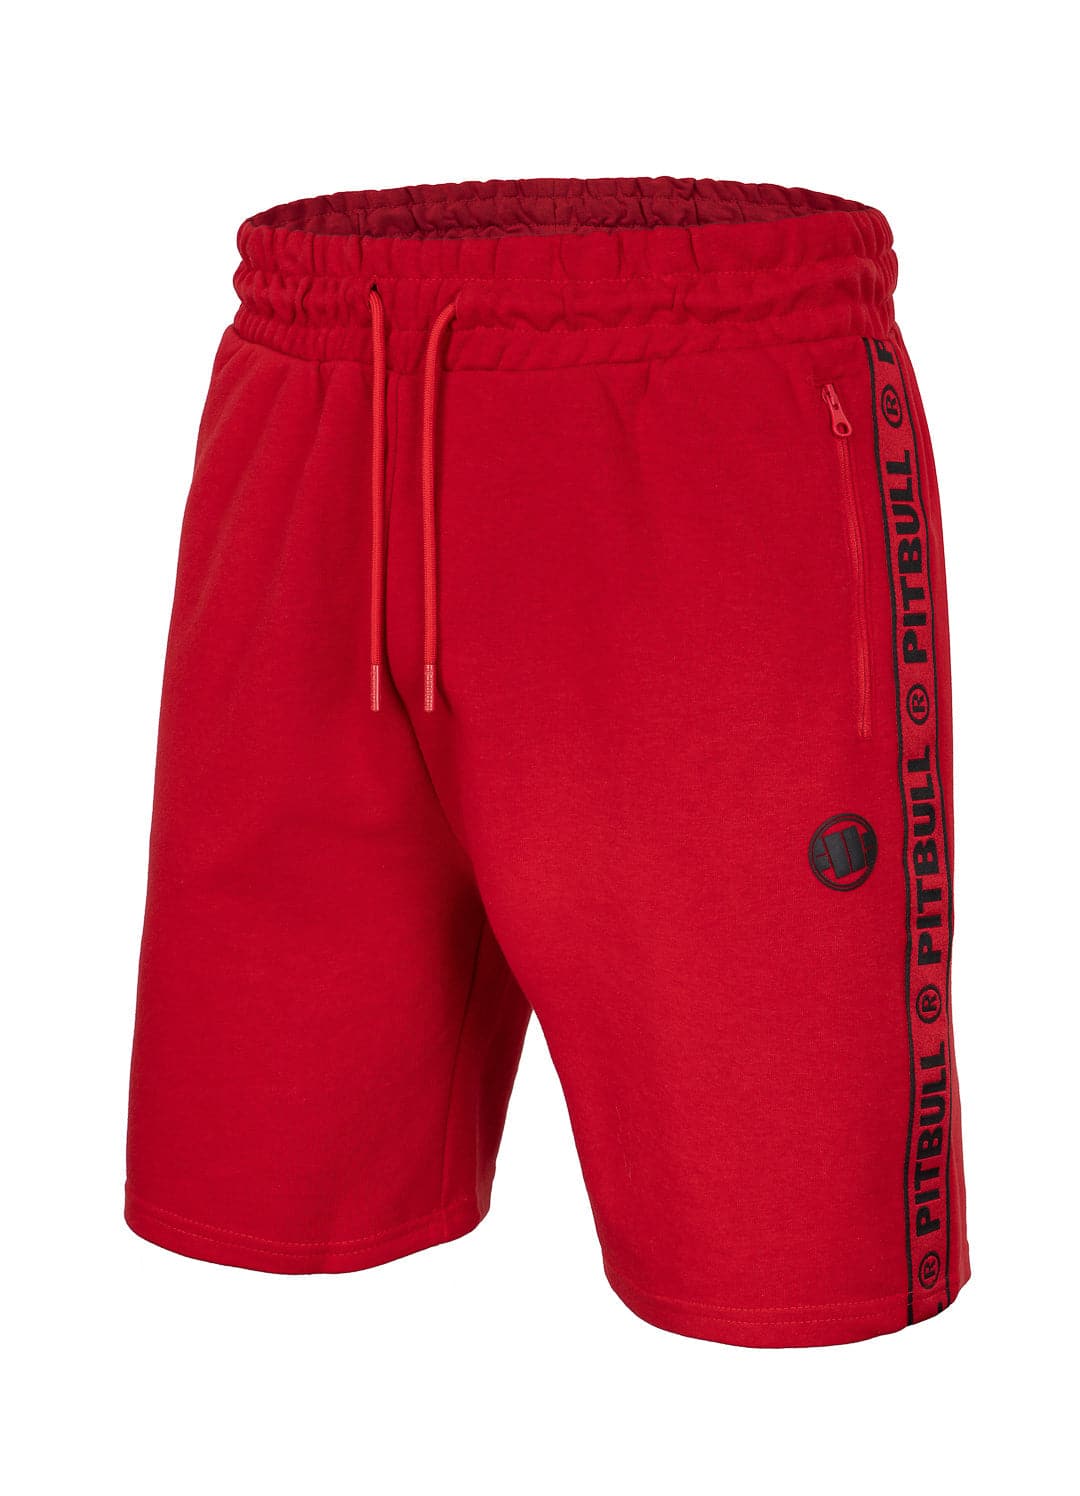 MERIDAN Red Shorts.